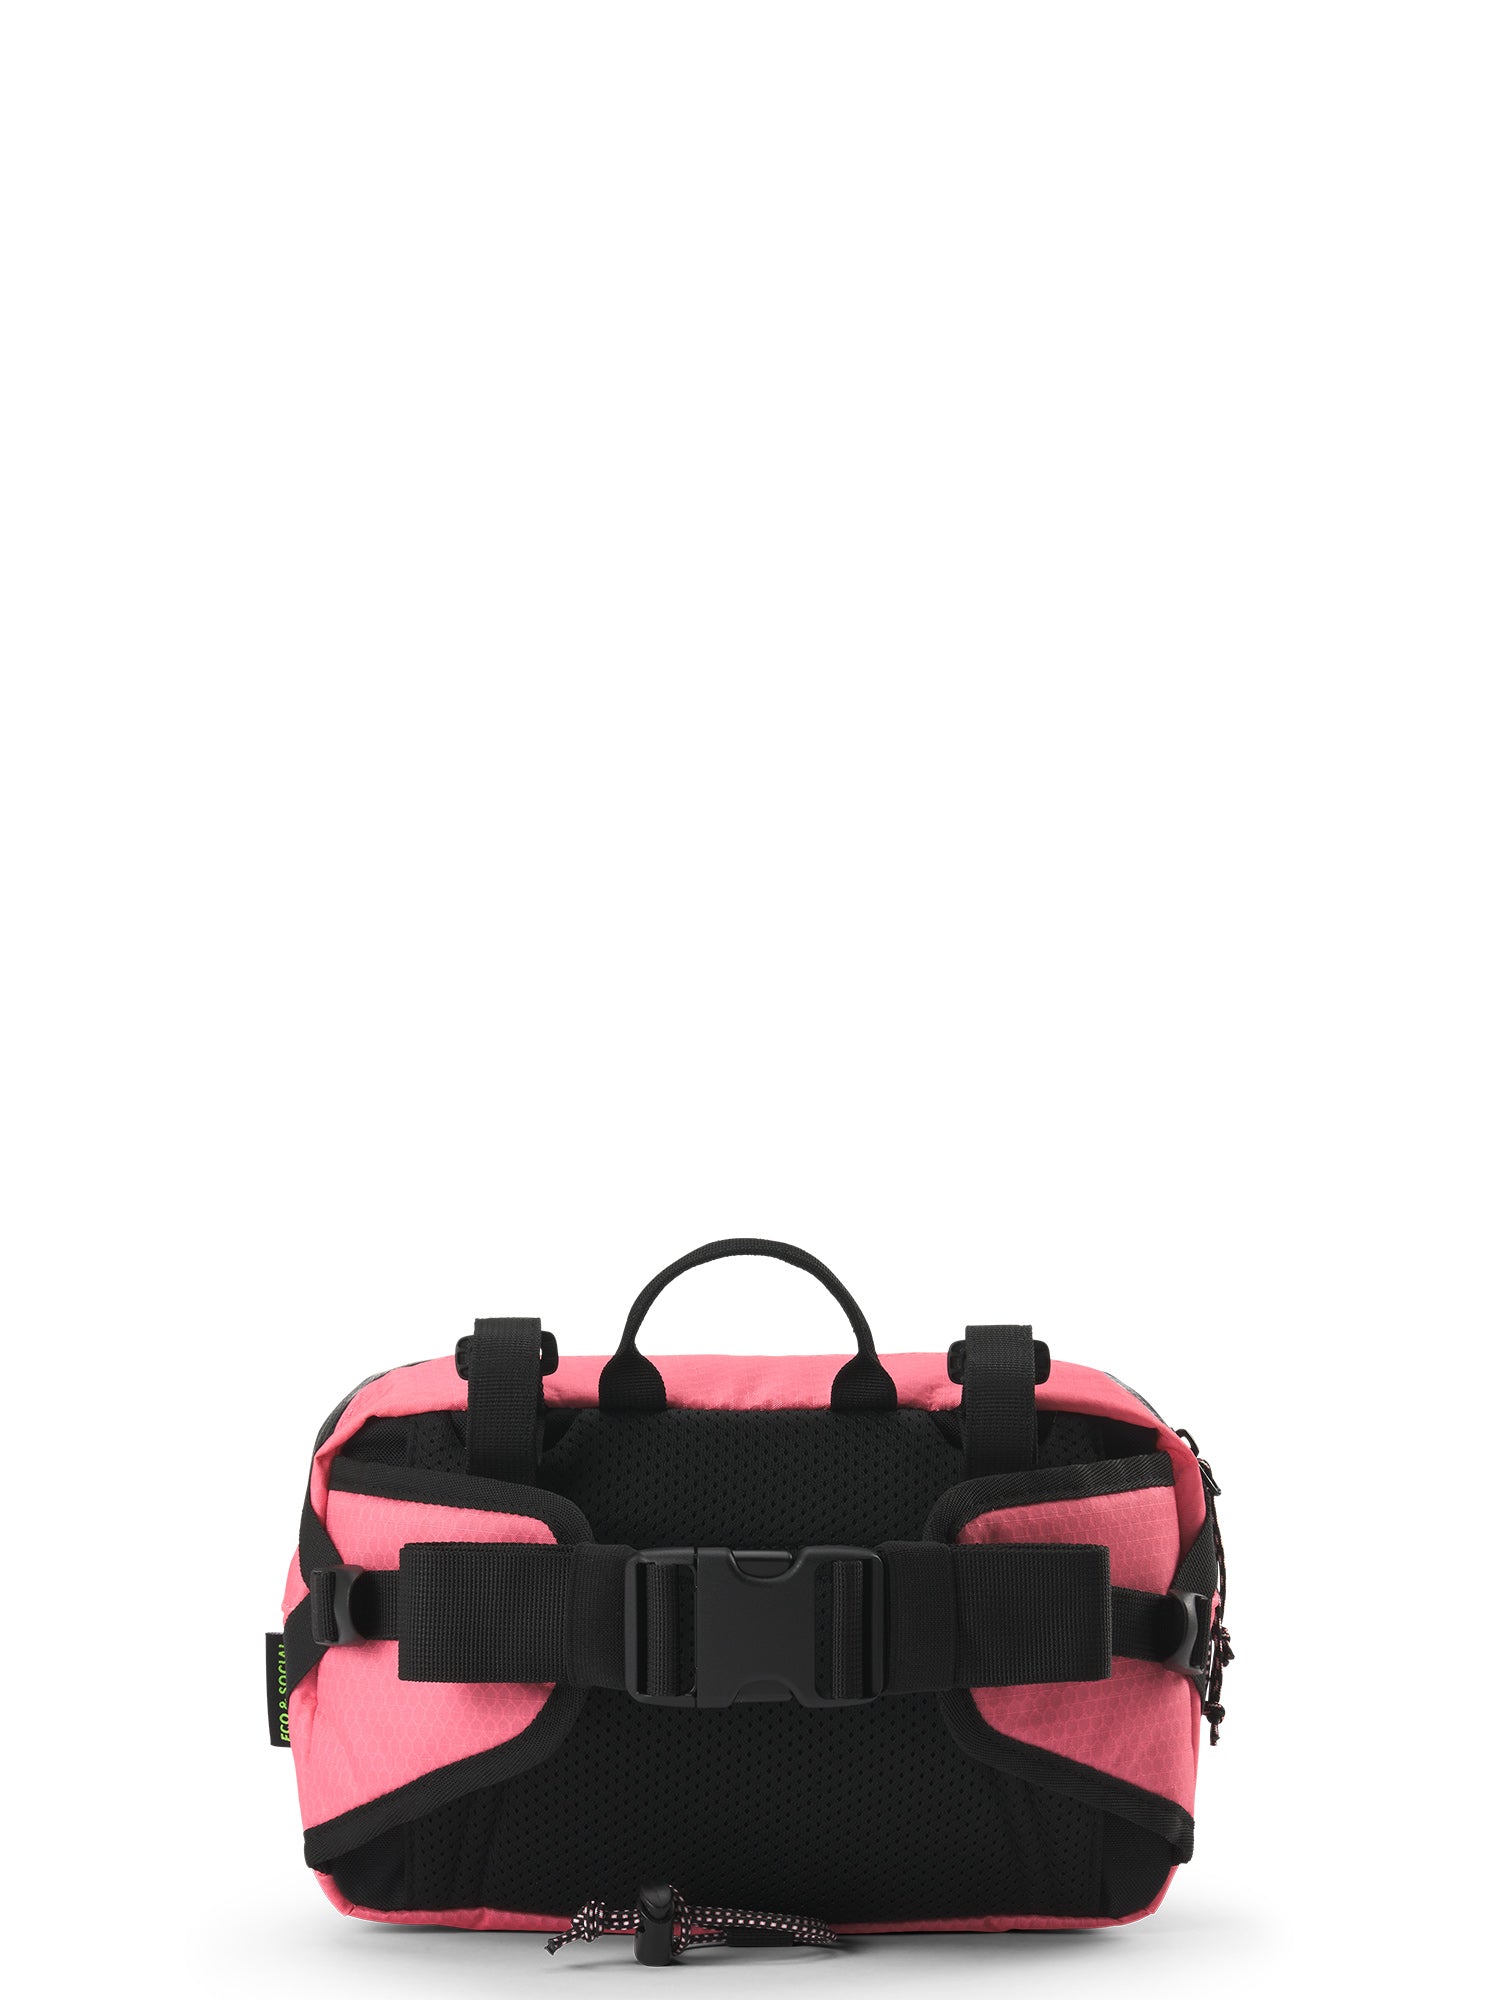 AEVOR Bar Bag handlebar bag / GIRO SPECIAL MODEL - Proof Pink Flash